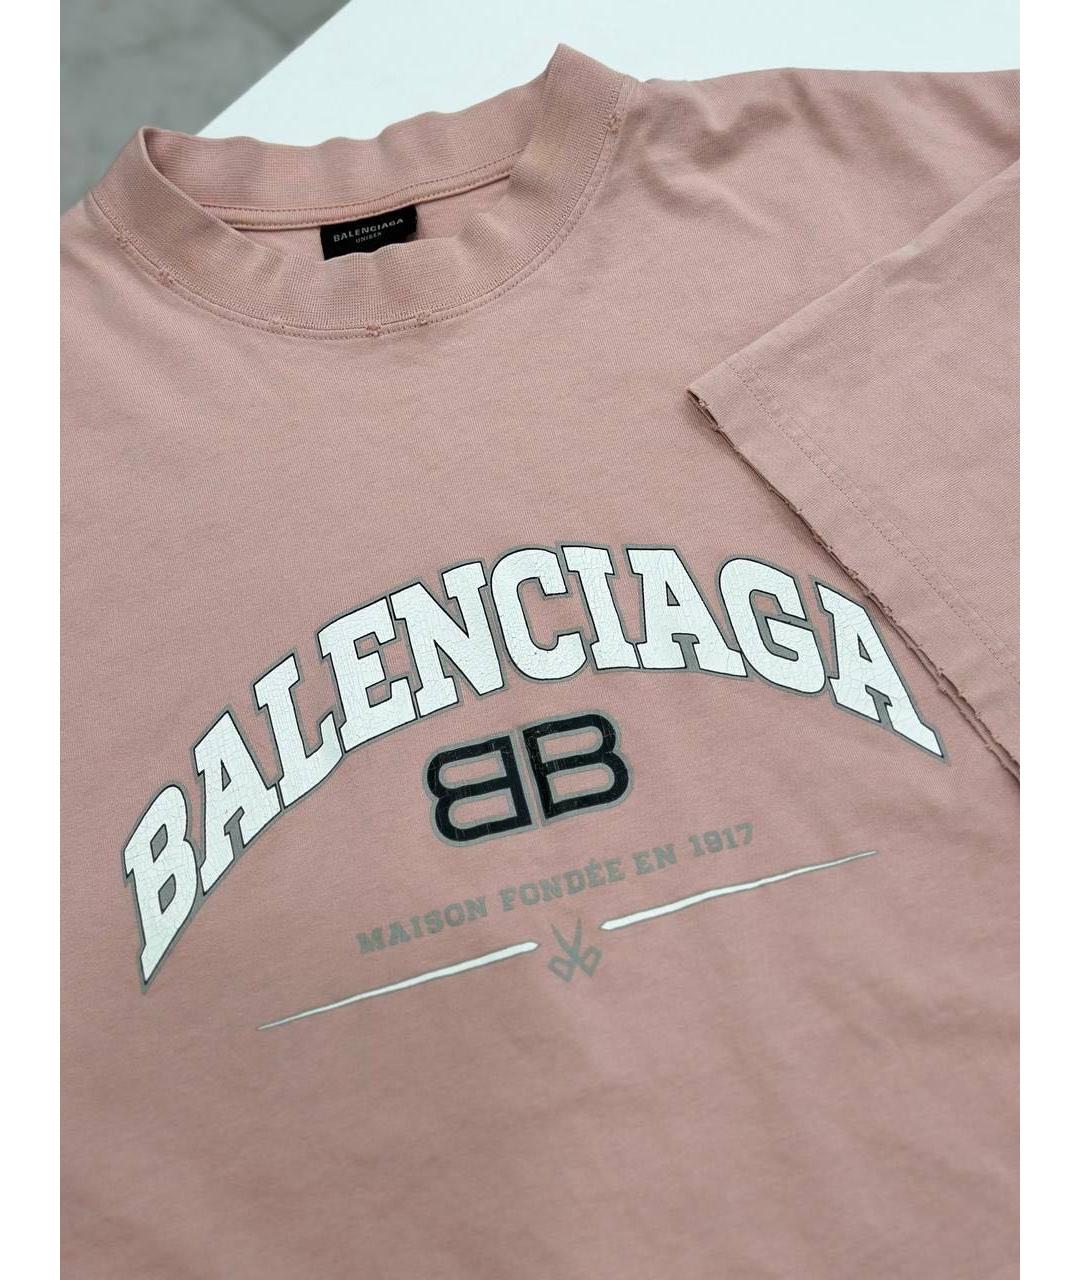 BALENCIAGA Розовая хлопковая футболка, фото 5